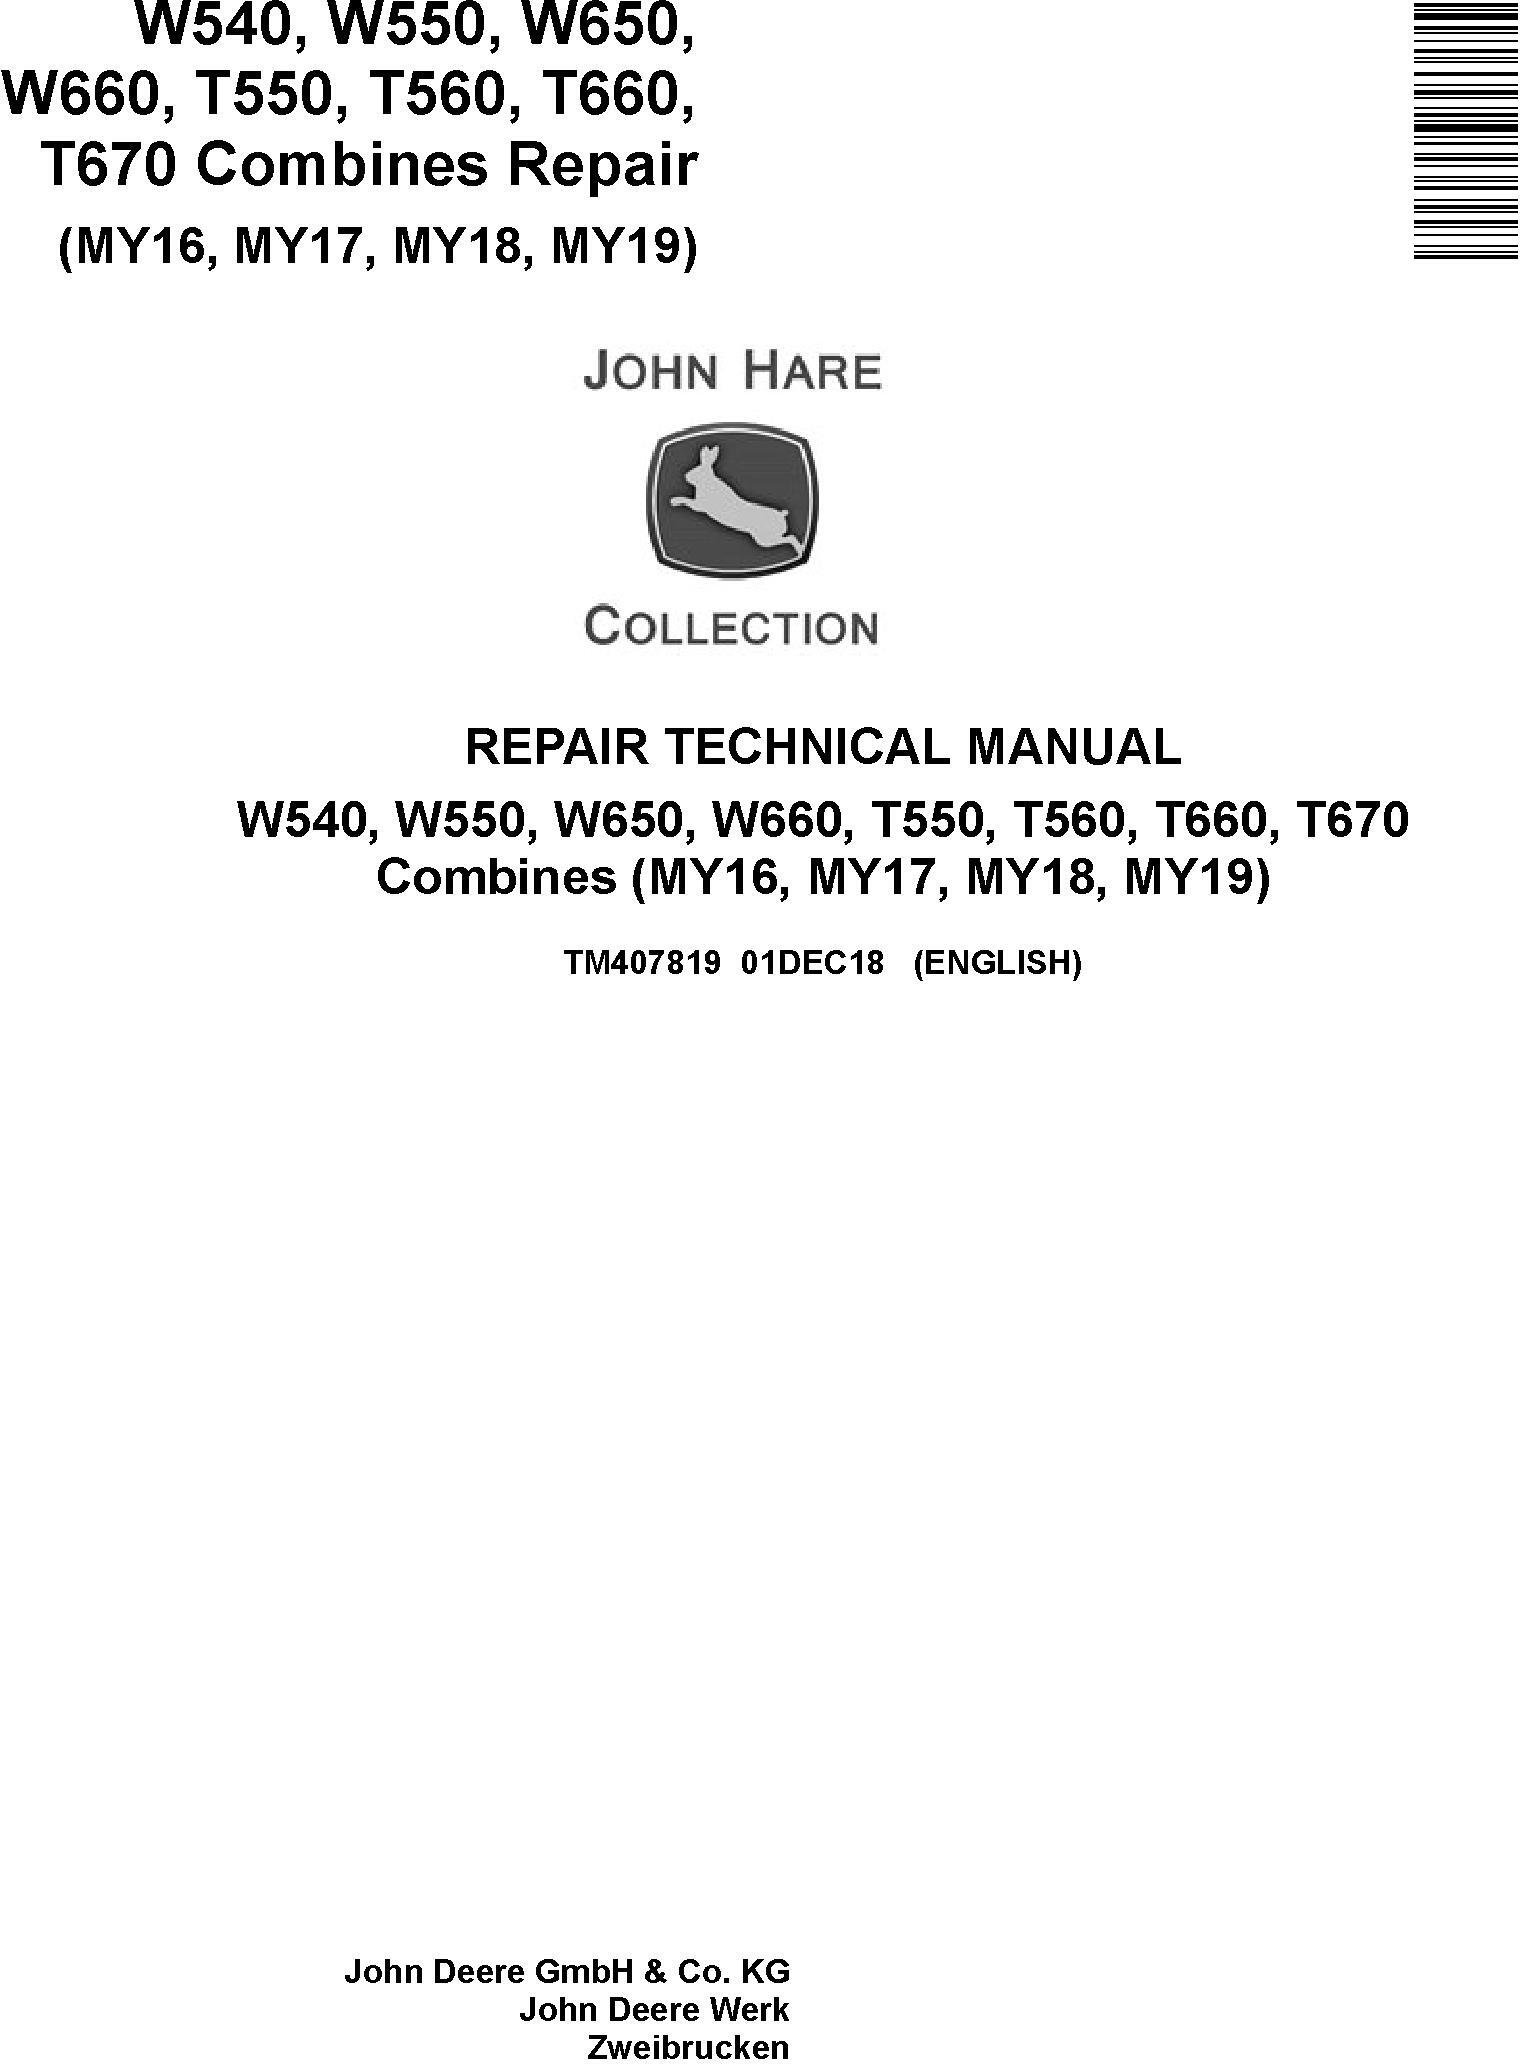  John Deere W540, W550, W650, W660, T550, T560, T660, T670 Combine Repair Technical Manual (TM407819) - 19227